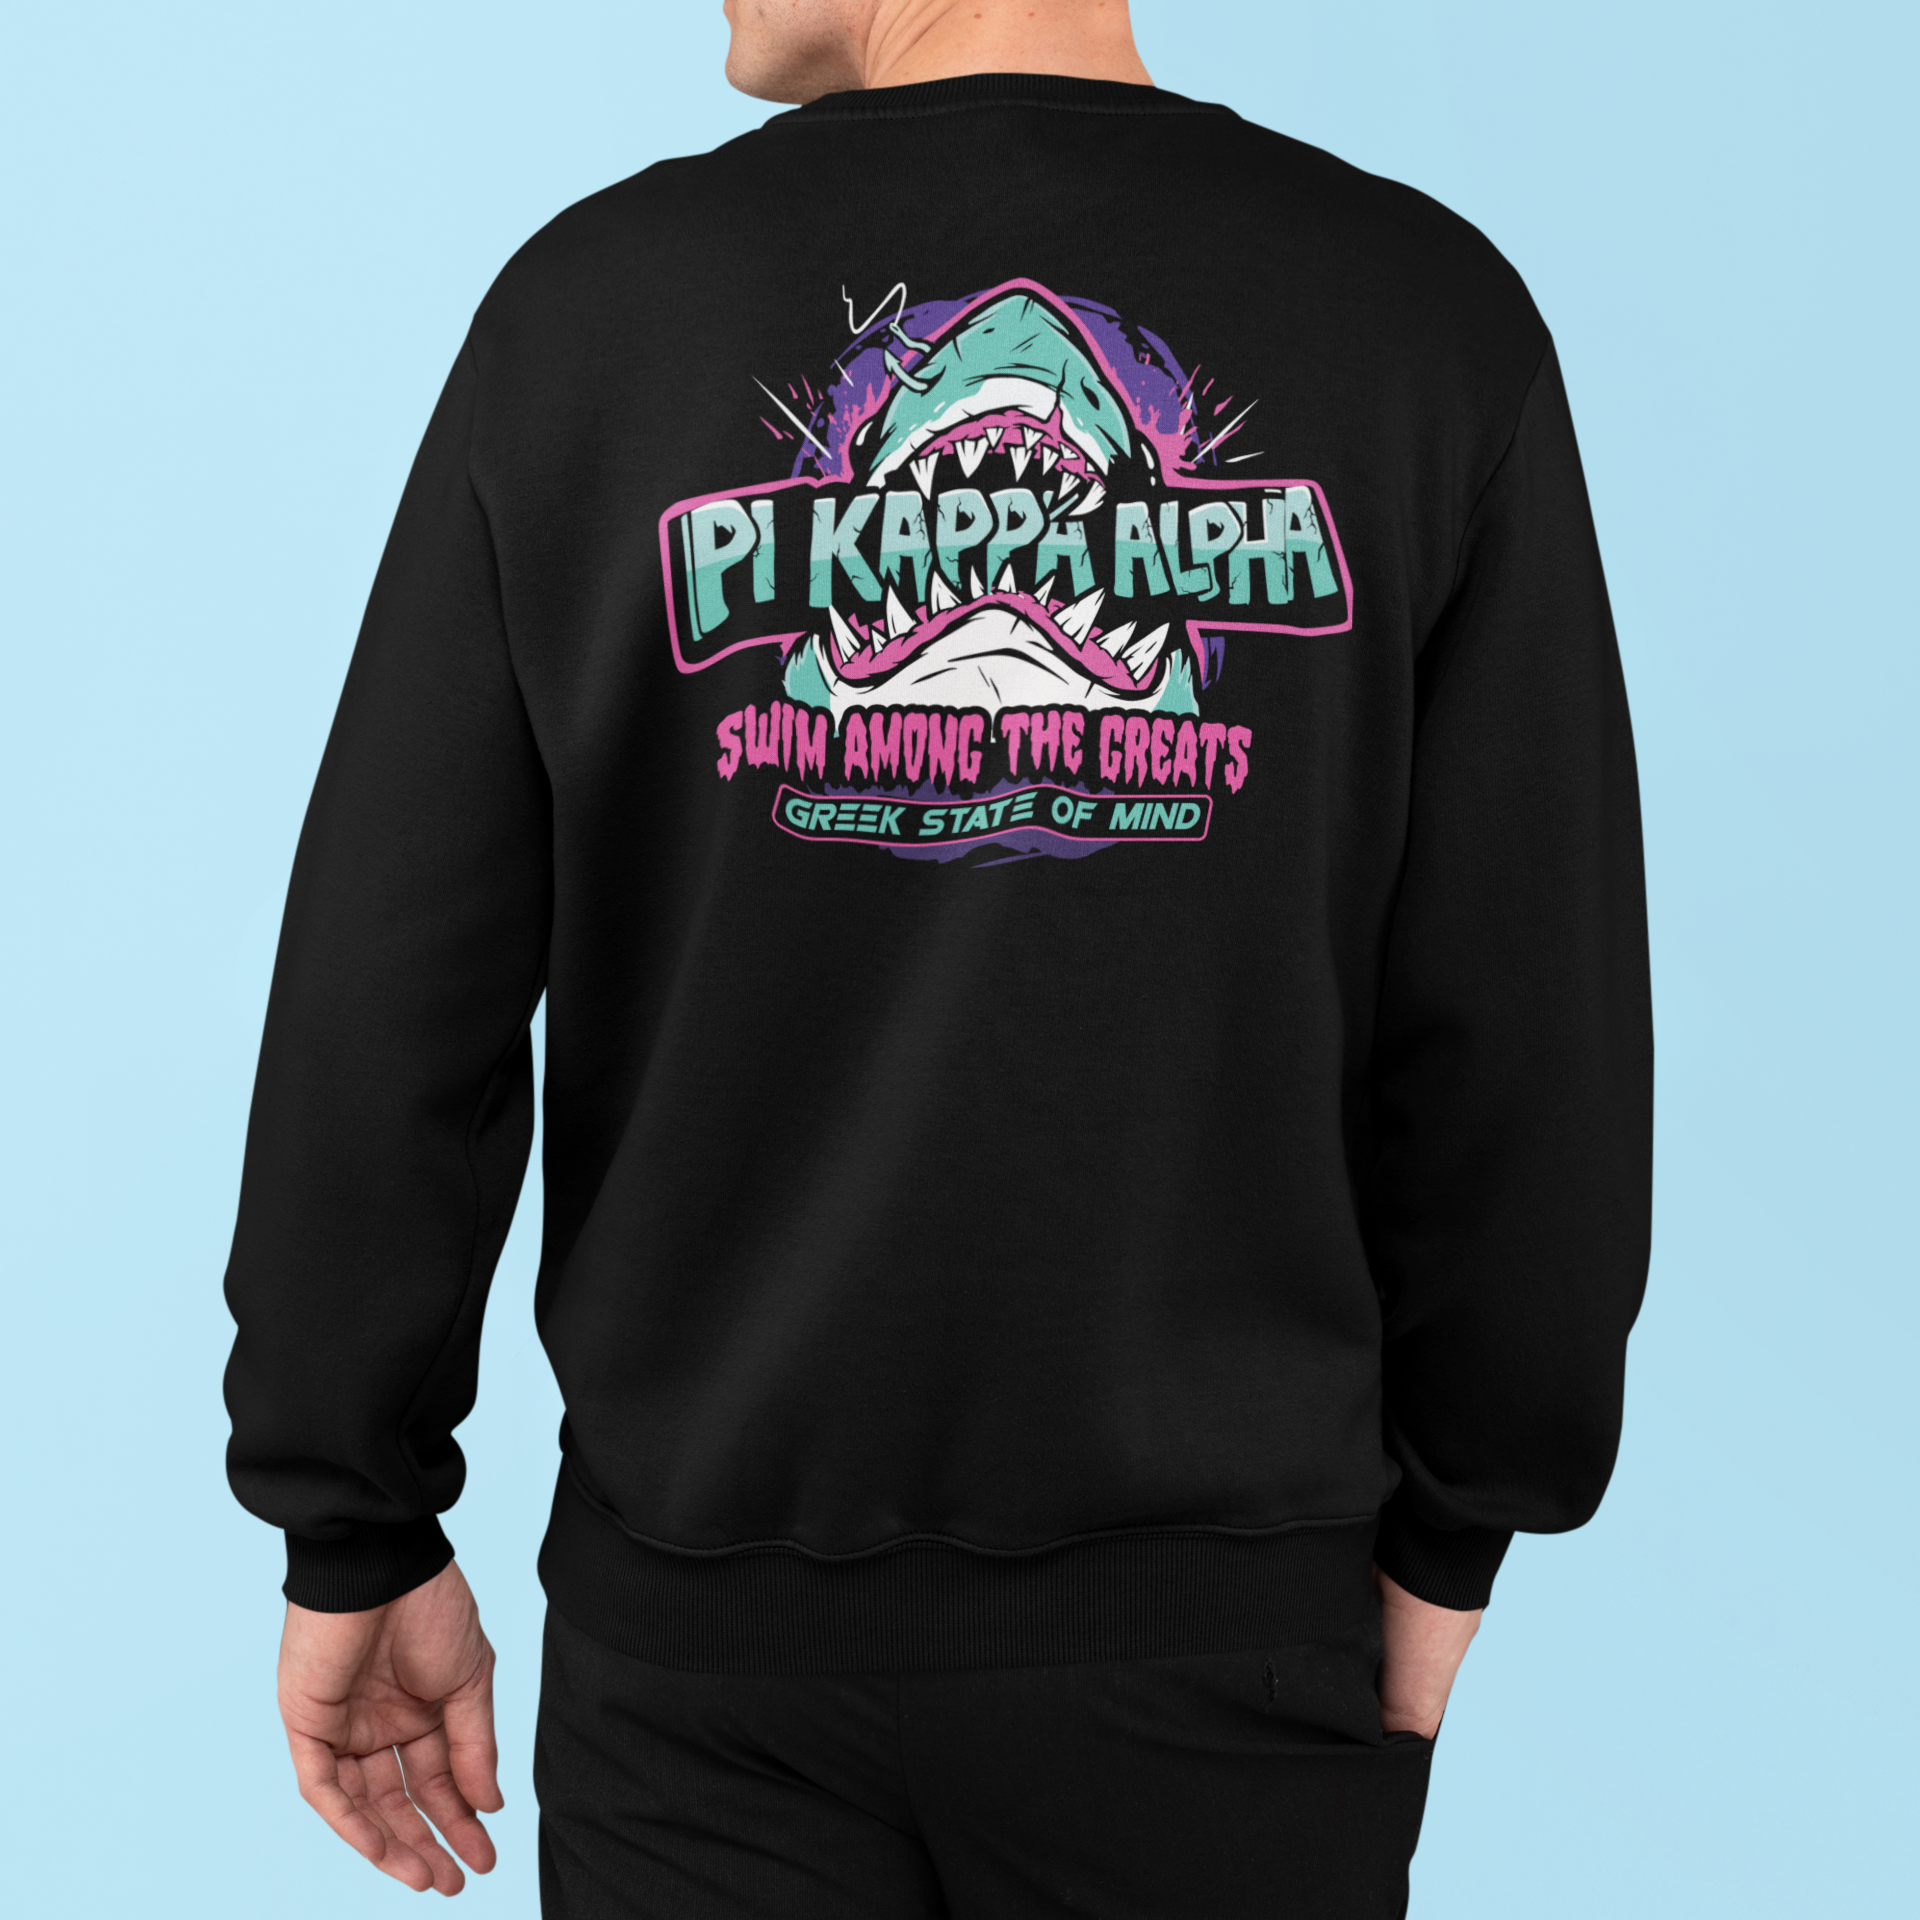 Pi Kappa Alpha Graphic Crewneck Sweatshirt | The Deep End | Pi kappa alpha fraternity shirt model 